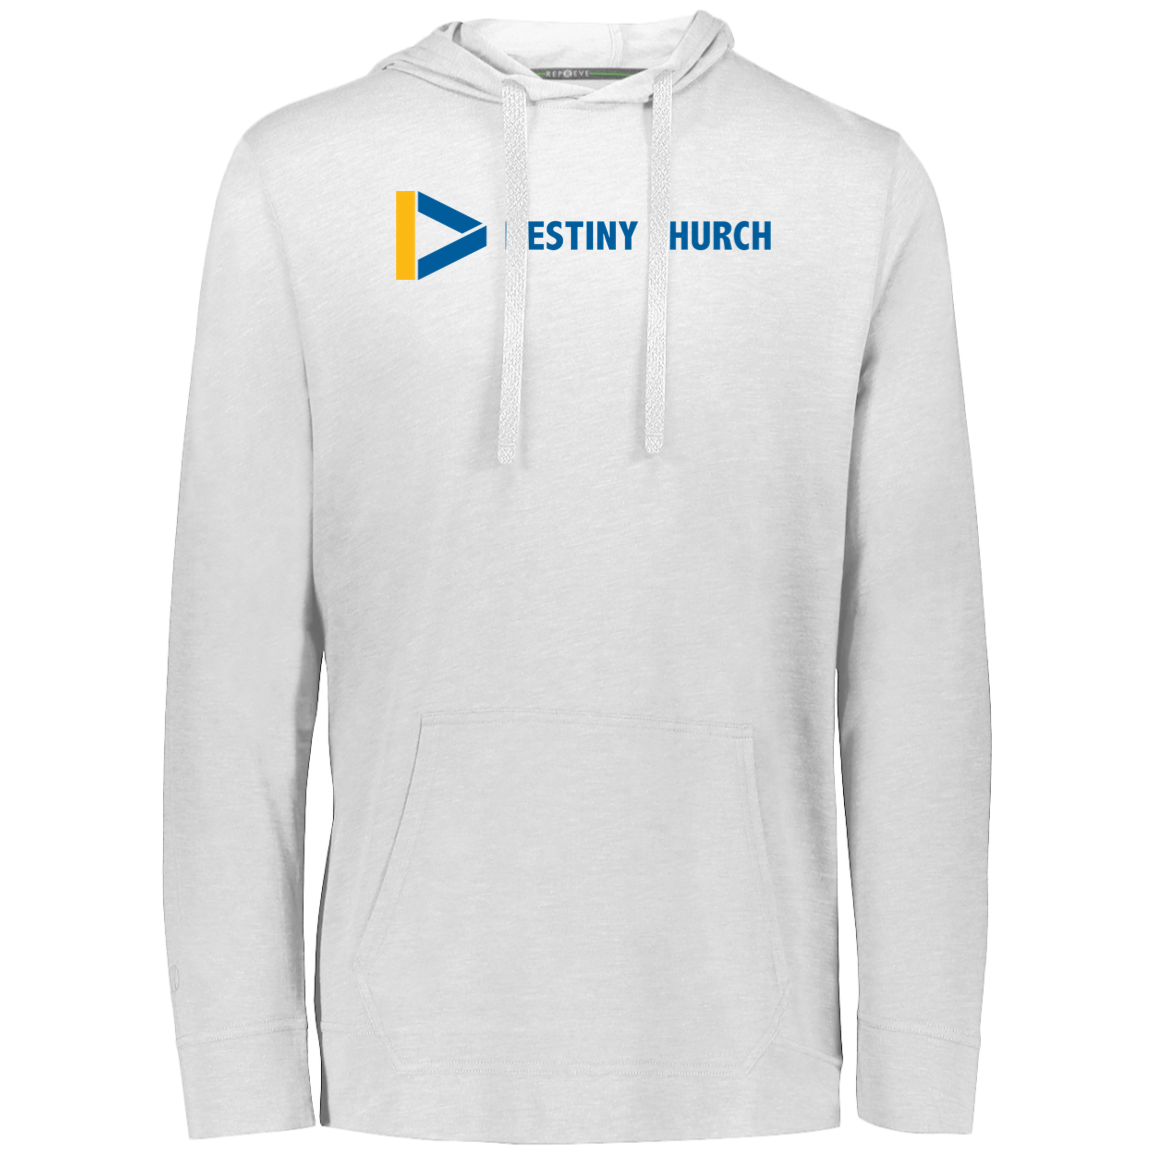 Destiny Church Logo - Hoodies